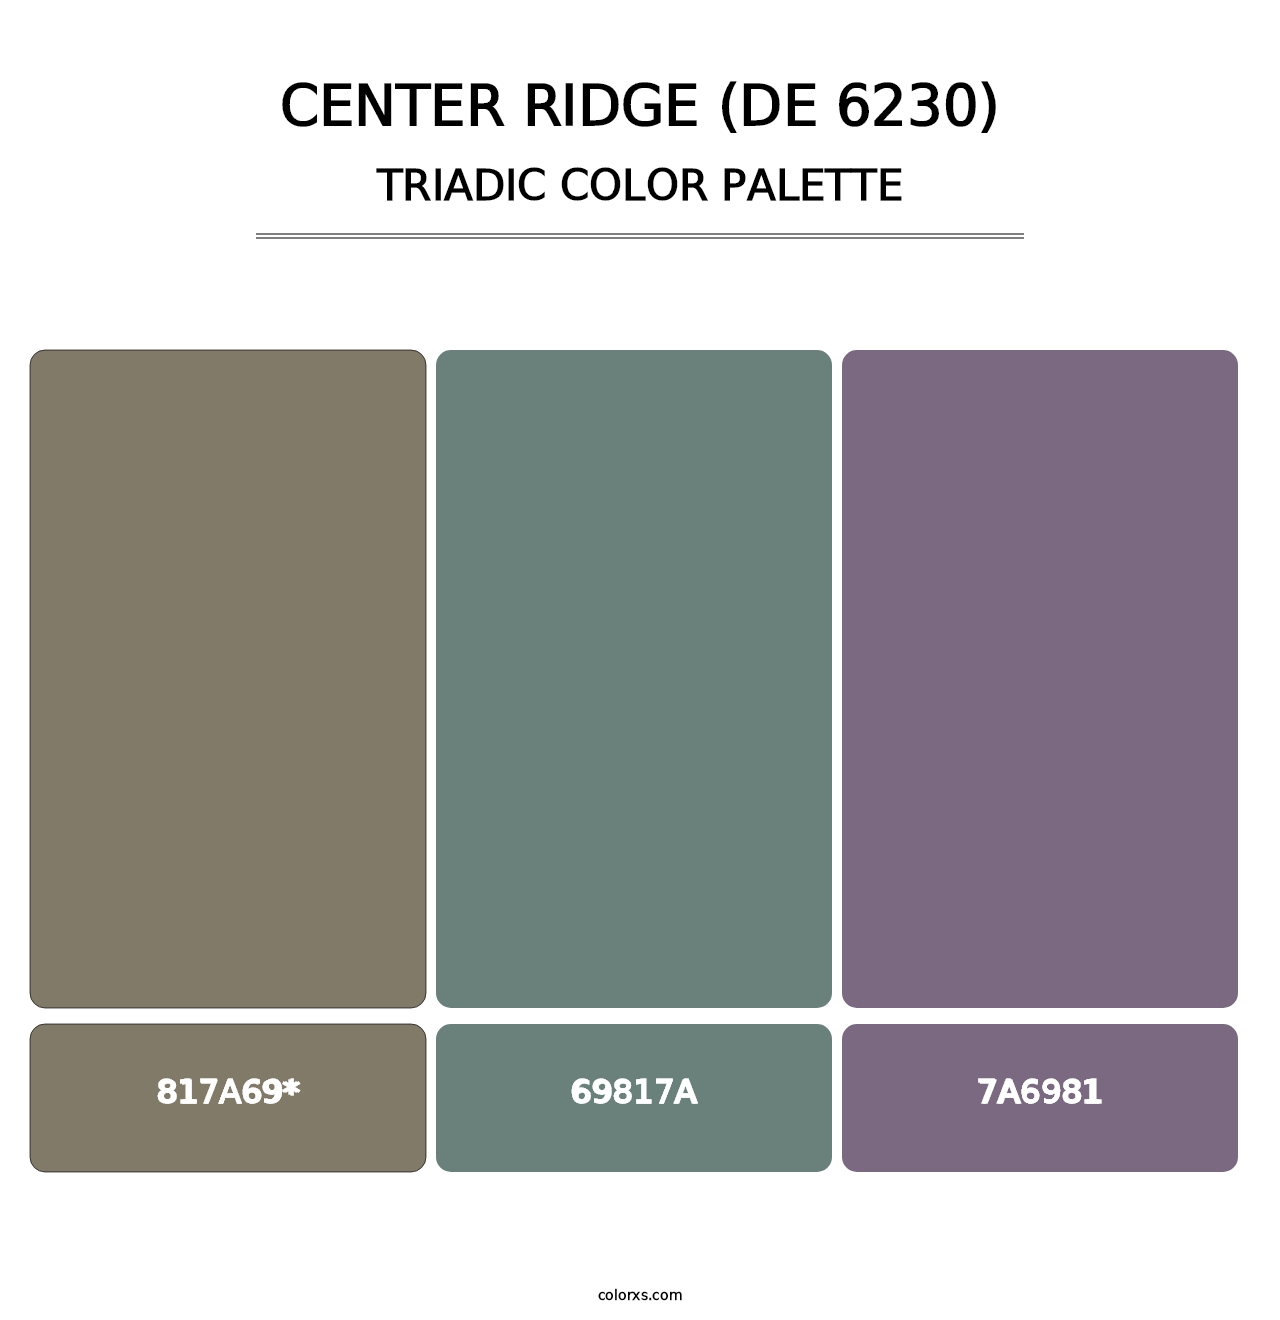 Center Ridge (DE 6230) - Triadic Color Palette